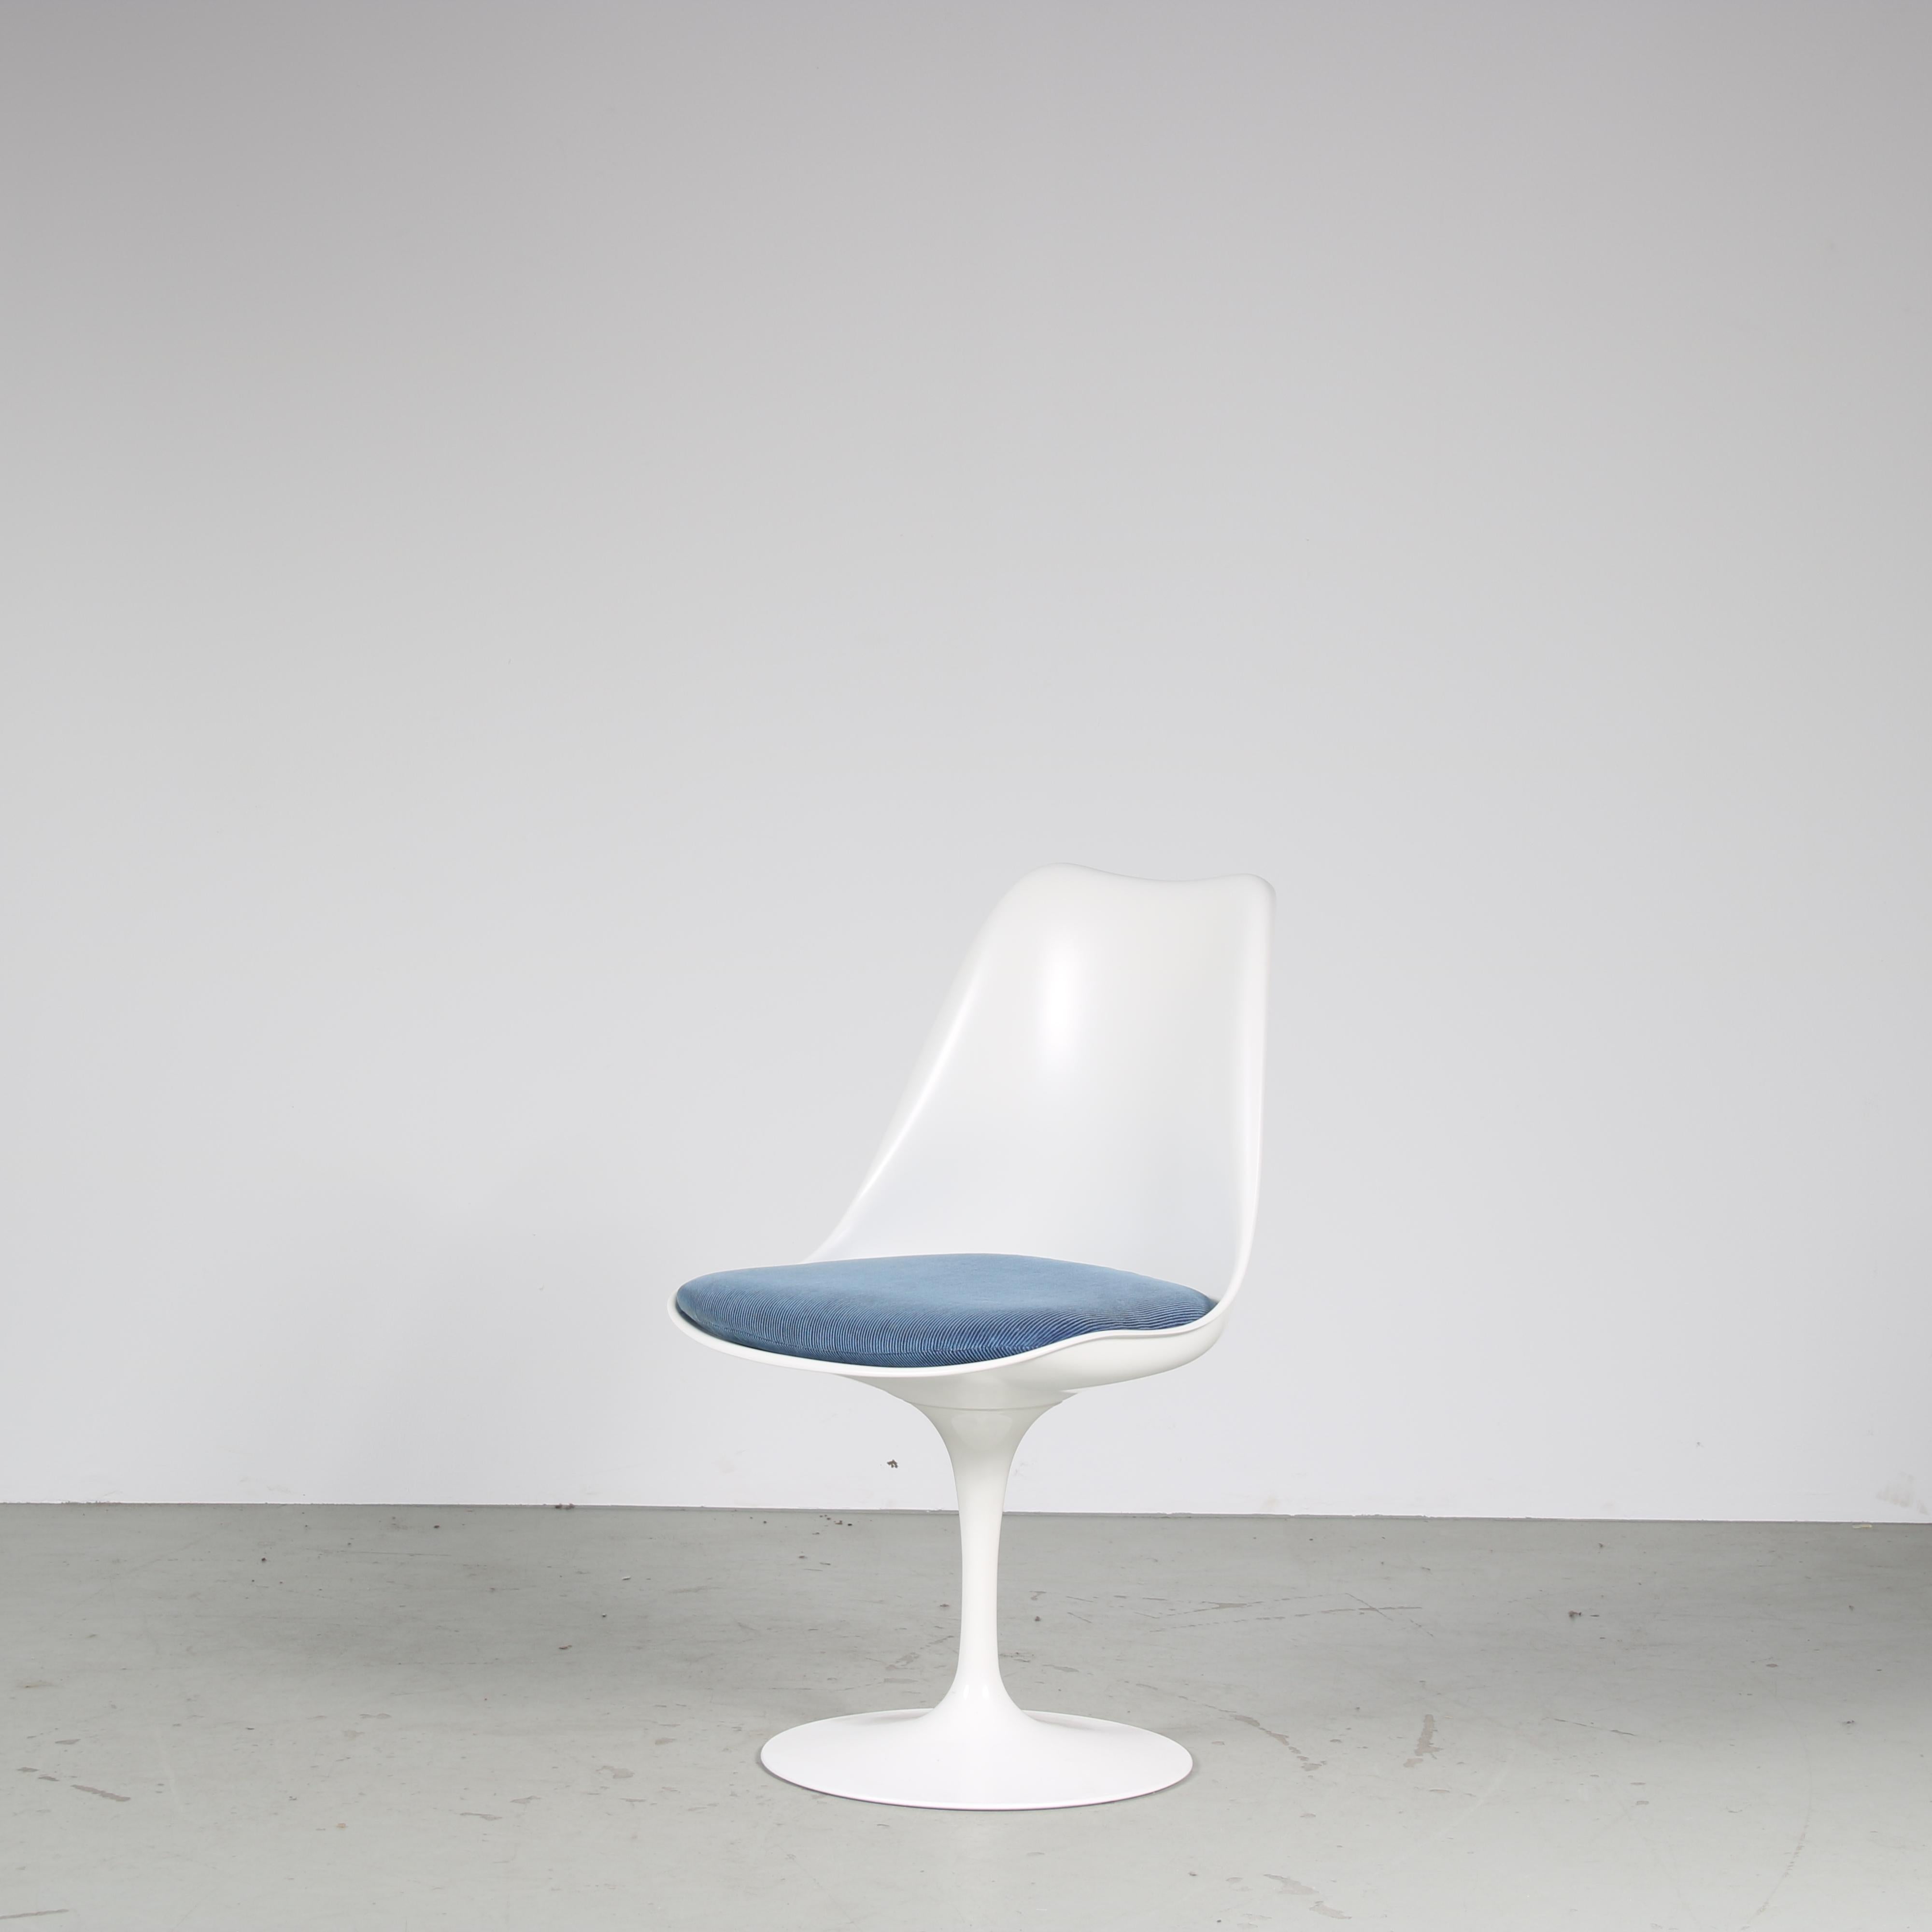 Aluminum “Tulip” Chairs by Eero Saarinen for Knoll International, USA 1960